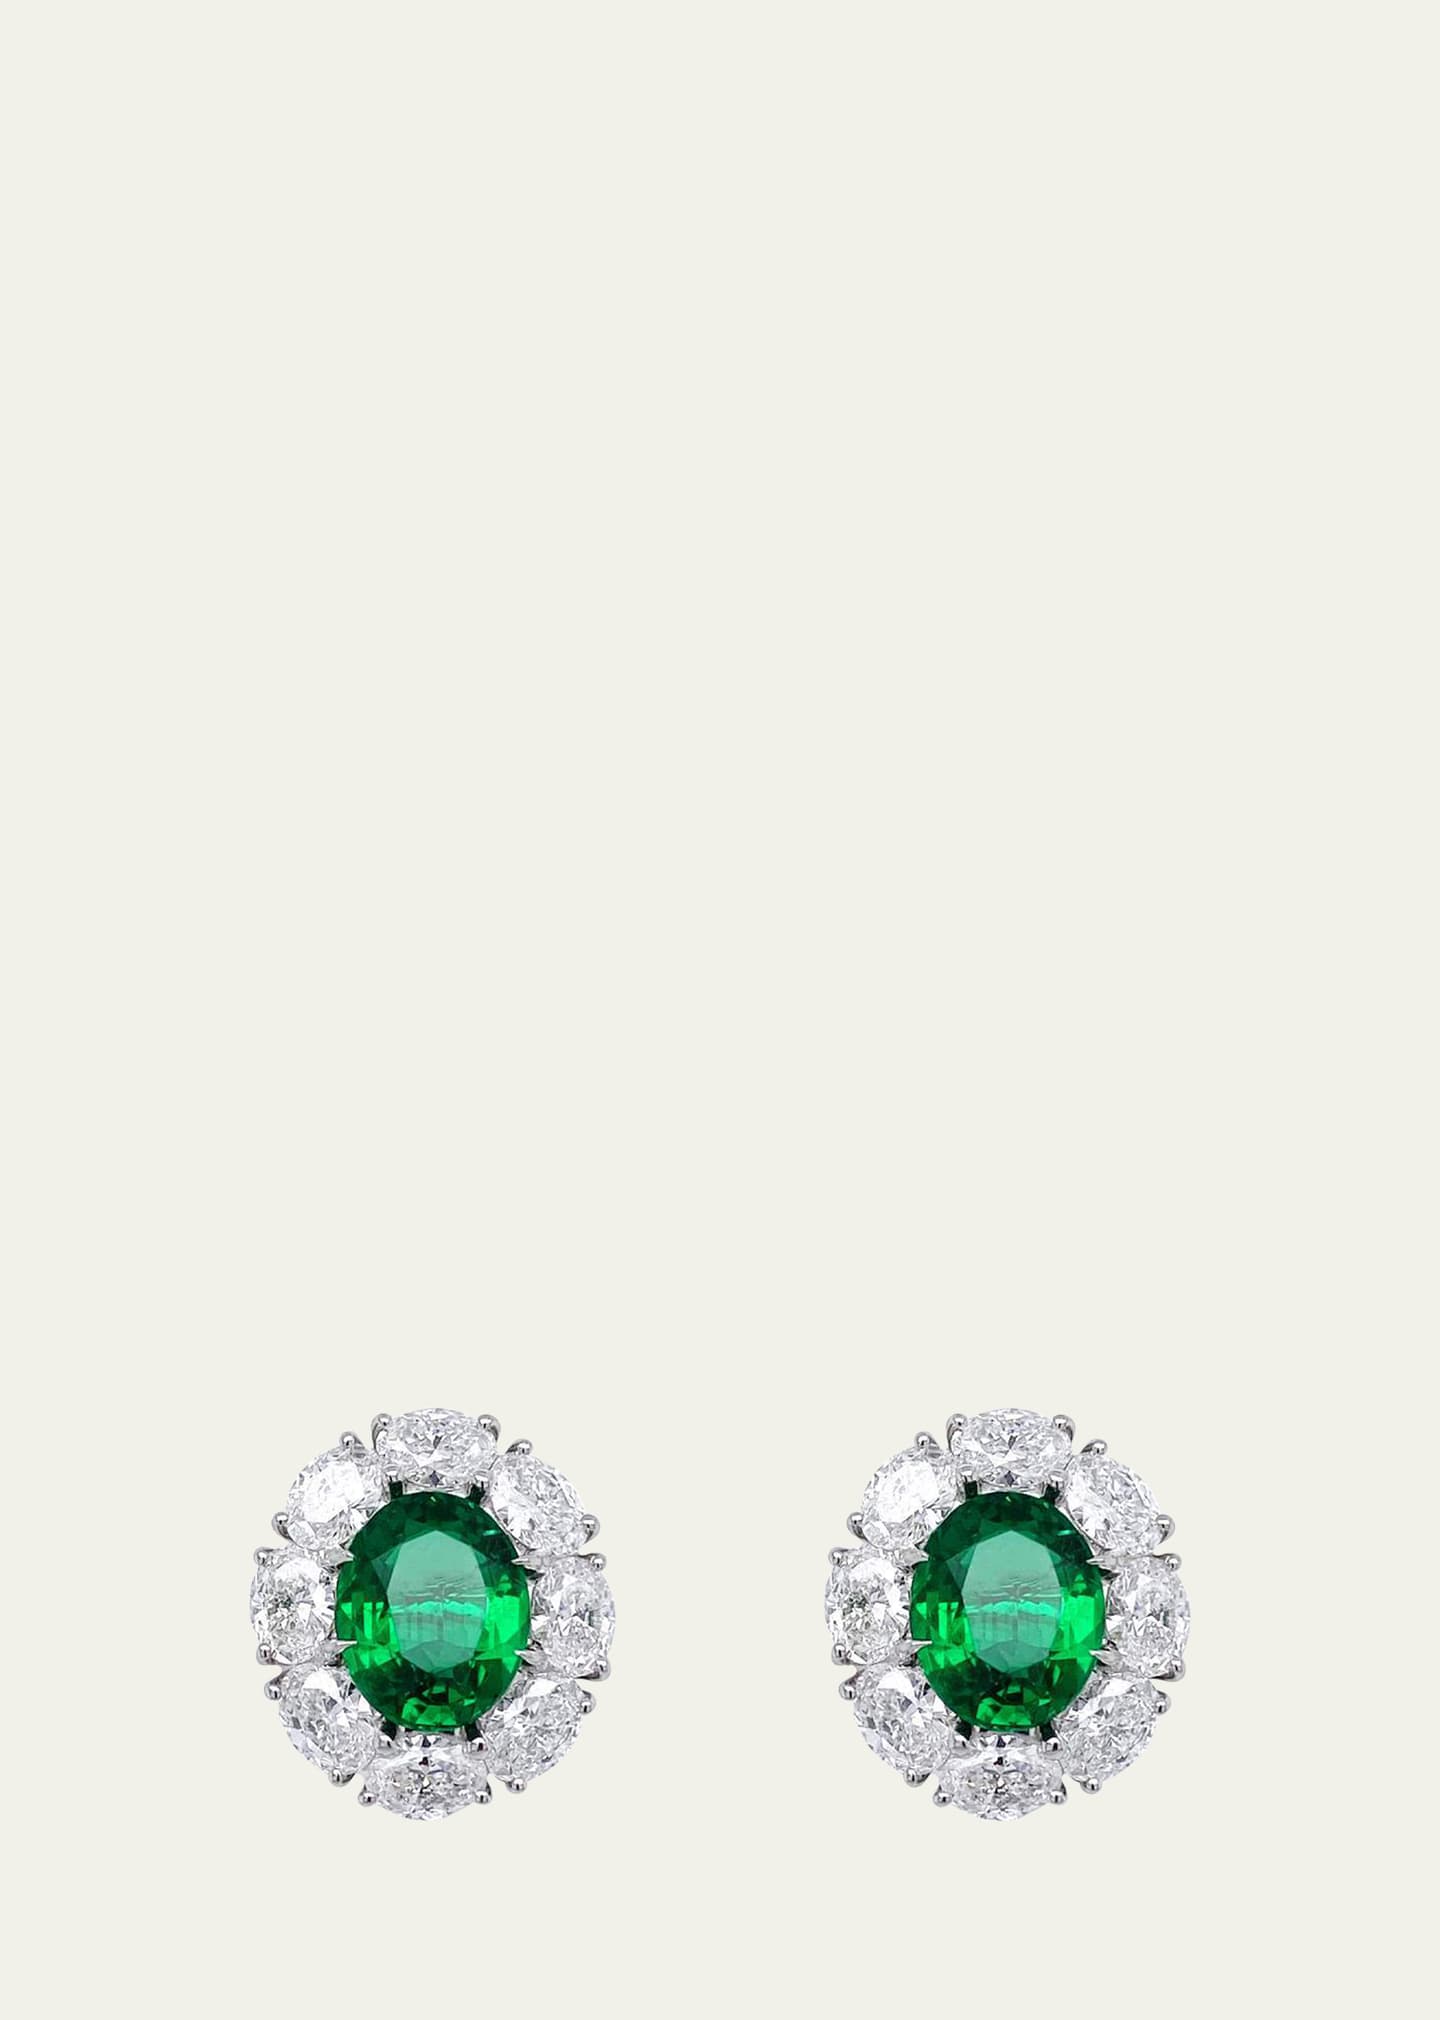 Platinum Zambian Emerald Stud Earrings with Diamonds